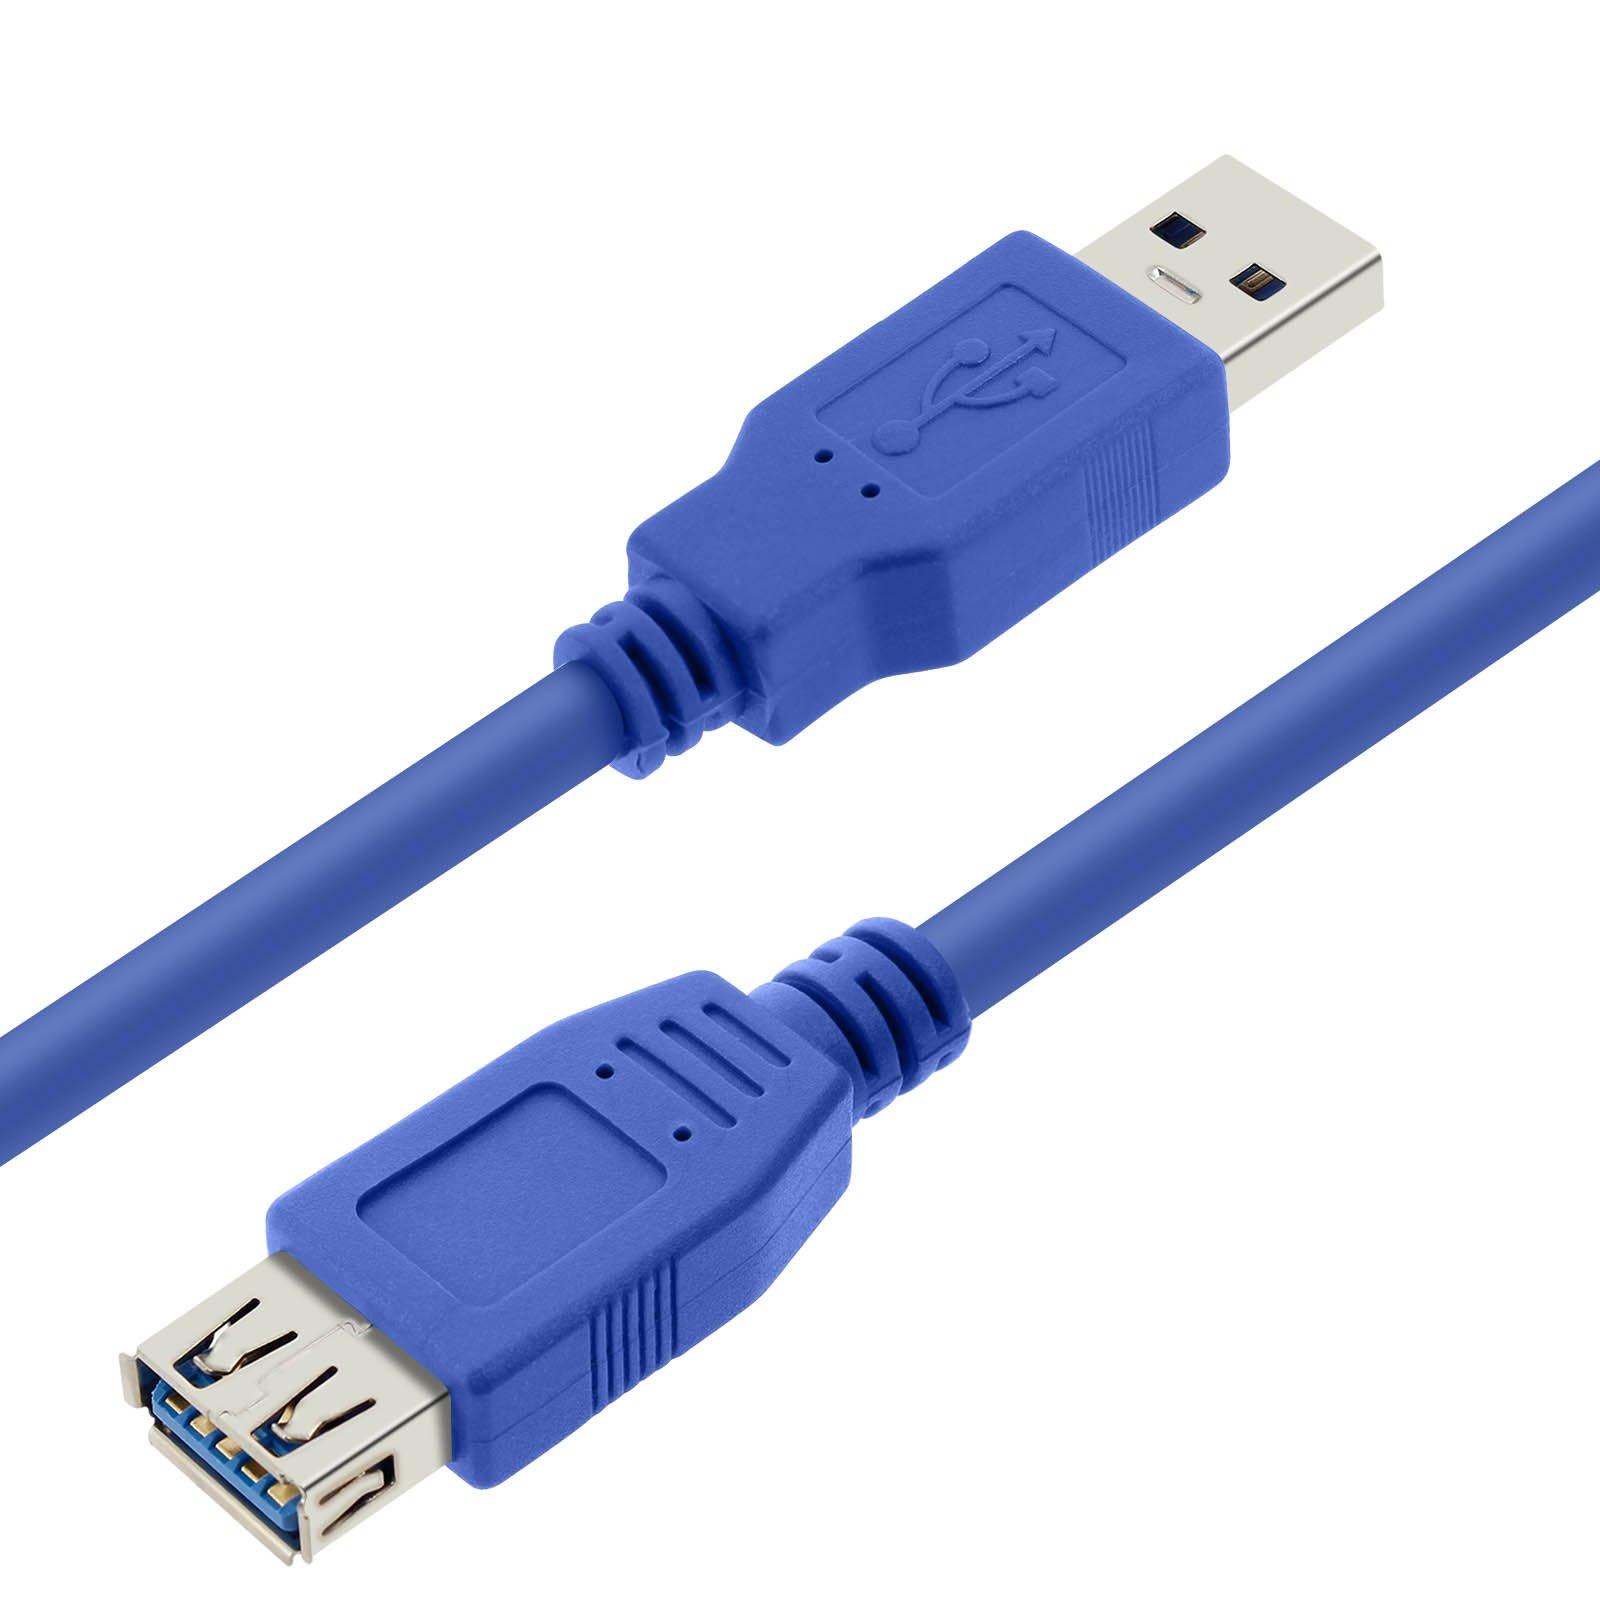 USB HUB rallonge 4x port USB 2.0 extension cable. NEUF / NEW